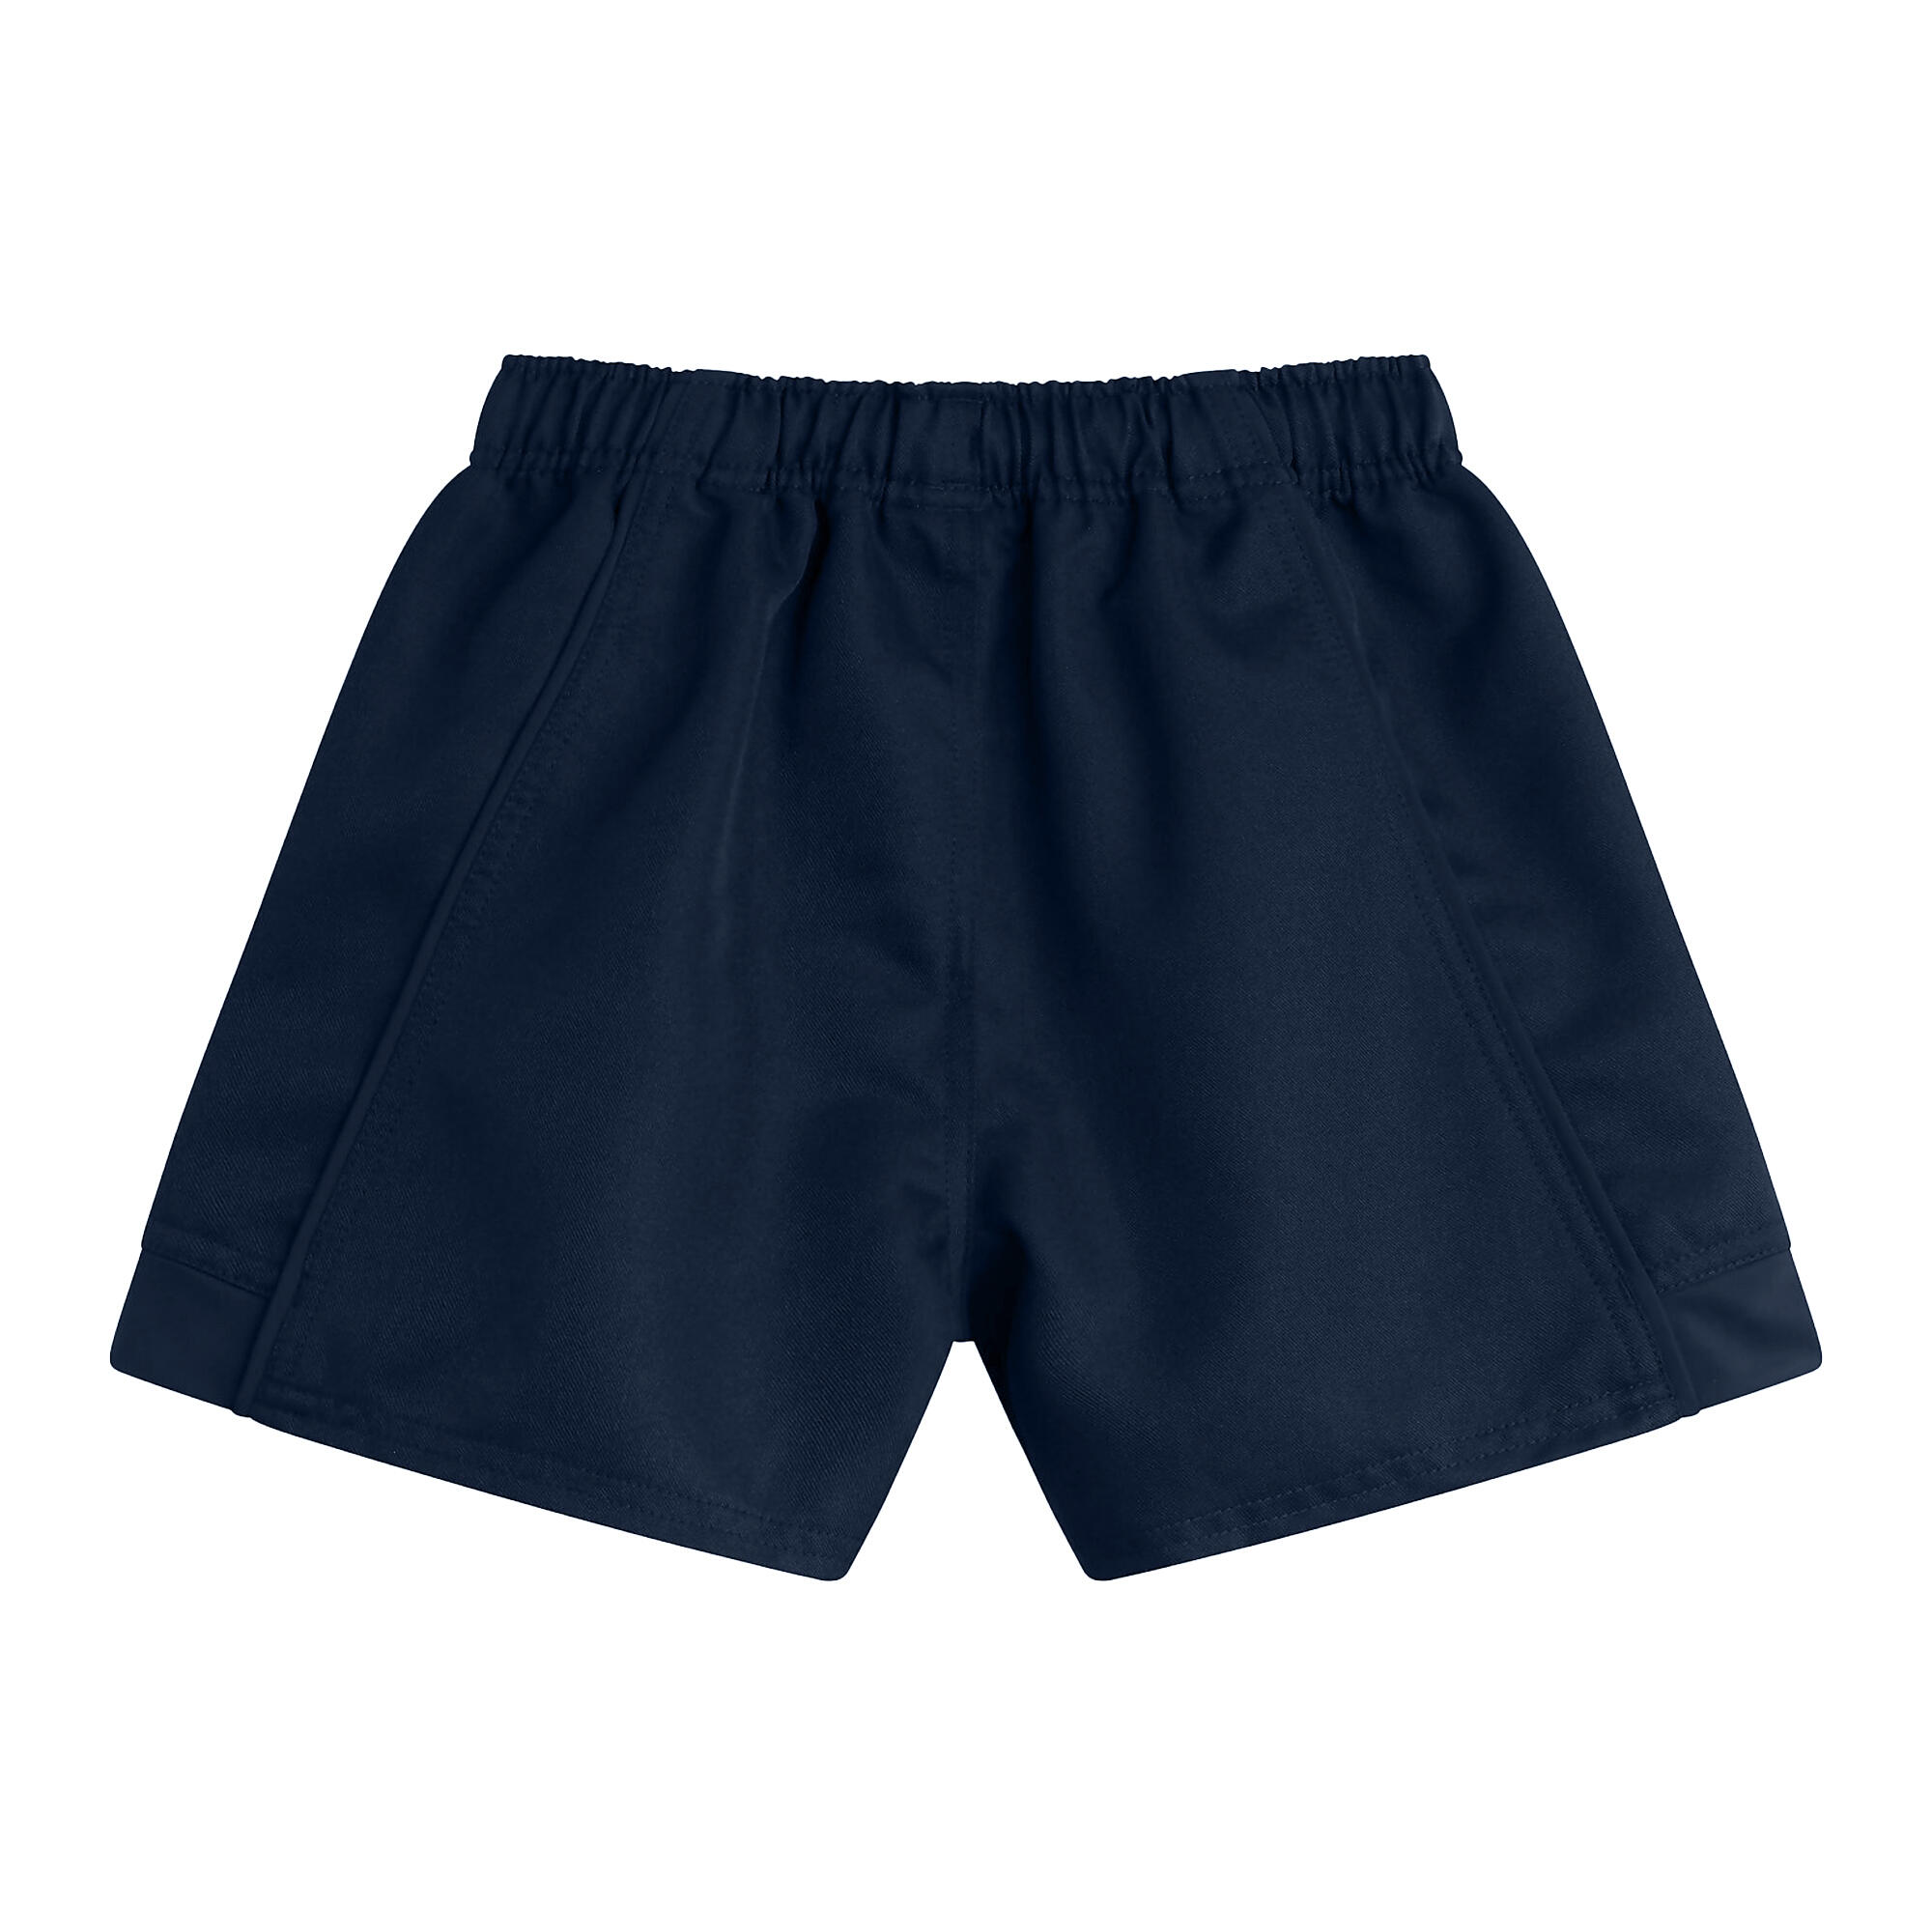 Childrens/Kids Advantage Shorts (Navy) 2/4